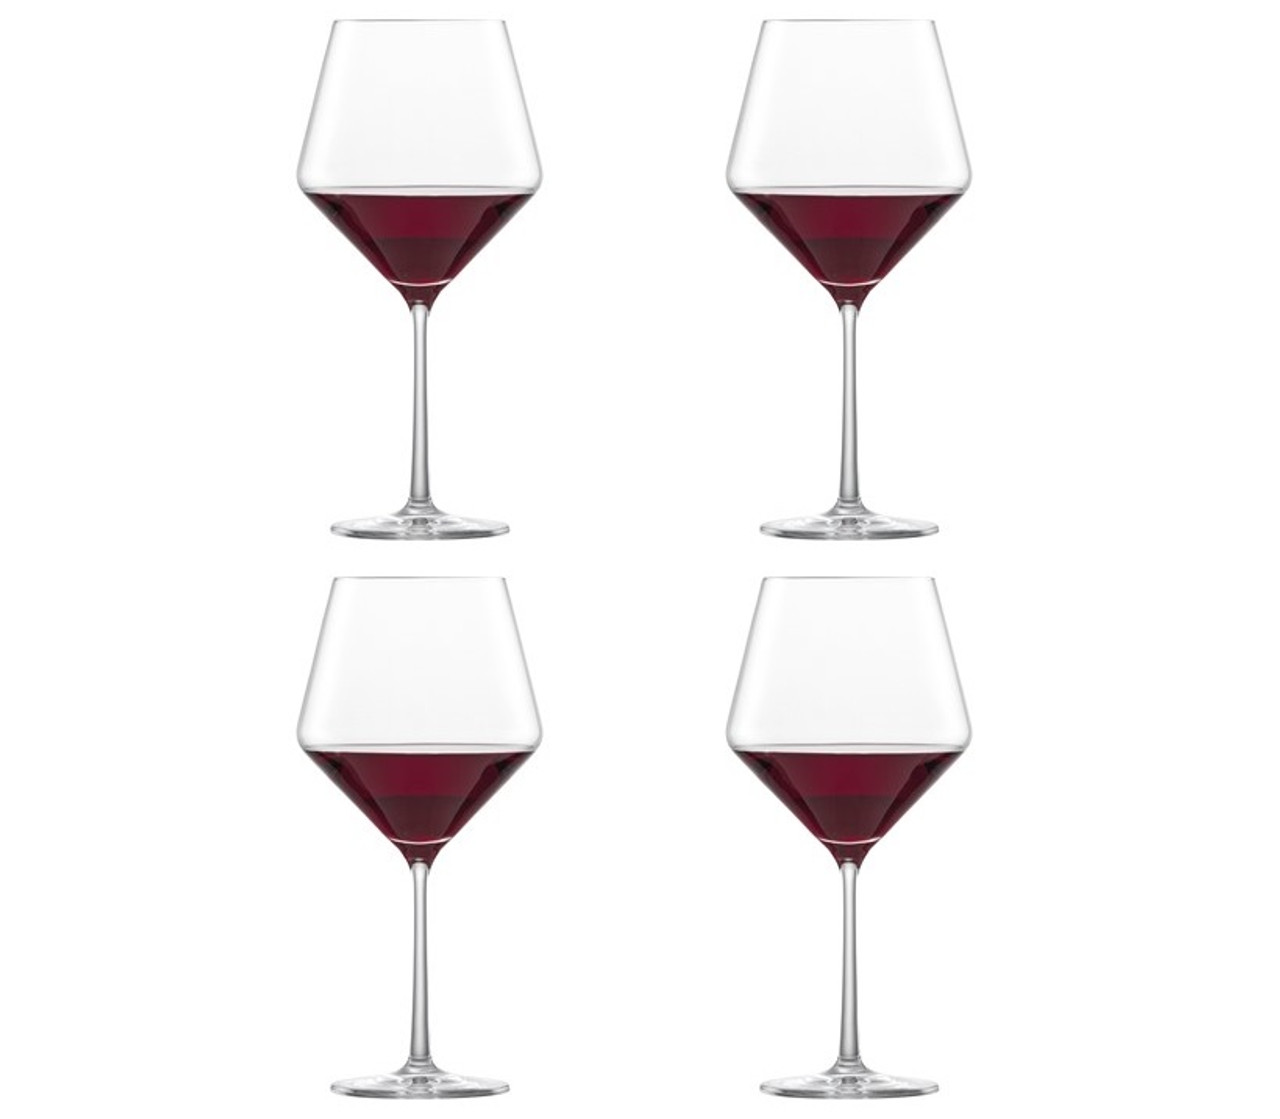 19oz Large Red Wine Glasses,Modern Burgundy Wine Glasses Set of 6,Clear  Long Stem Glassware Wide Bow…See more 19oz Large Red Wine Glasses,Modern